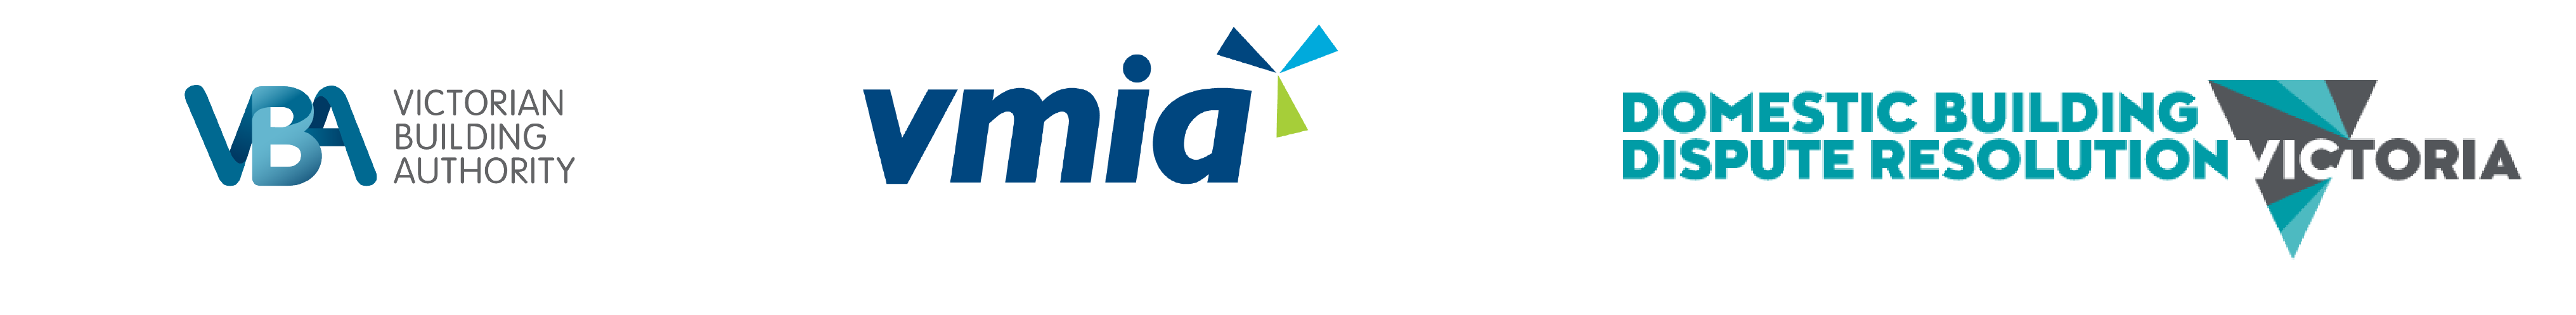 VBA, VMIA and Domestic Building Dispute Resolution Victoria logos